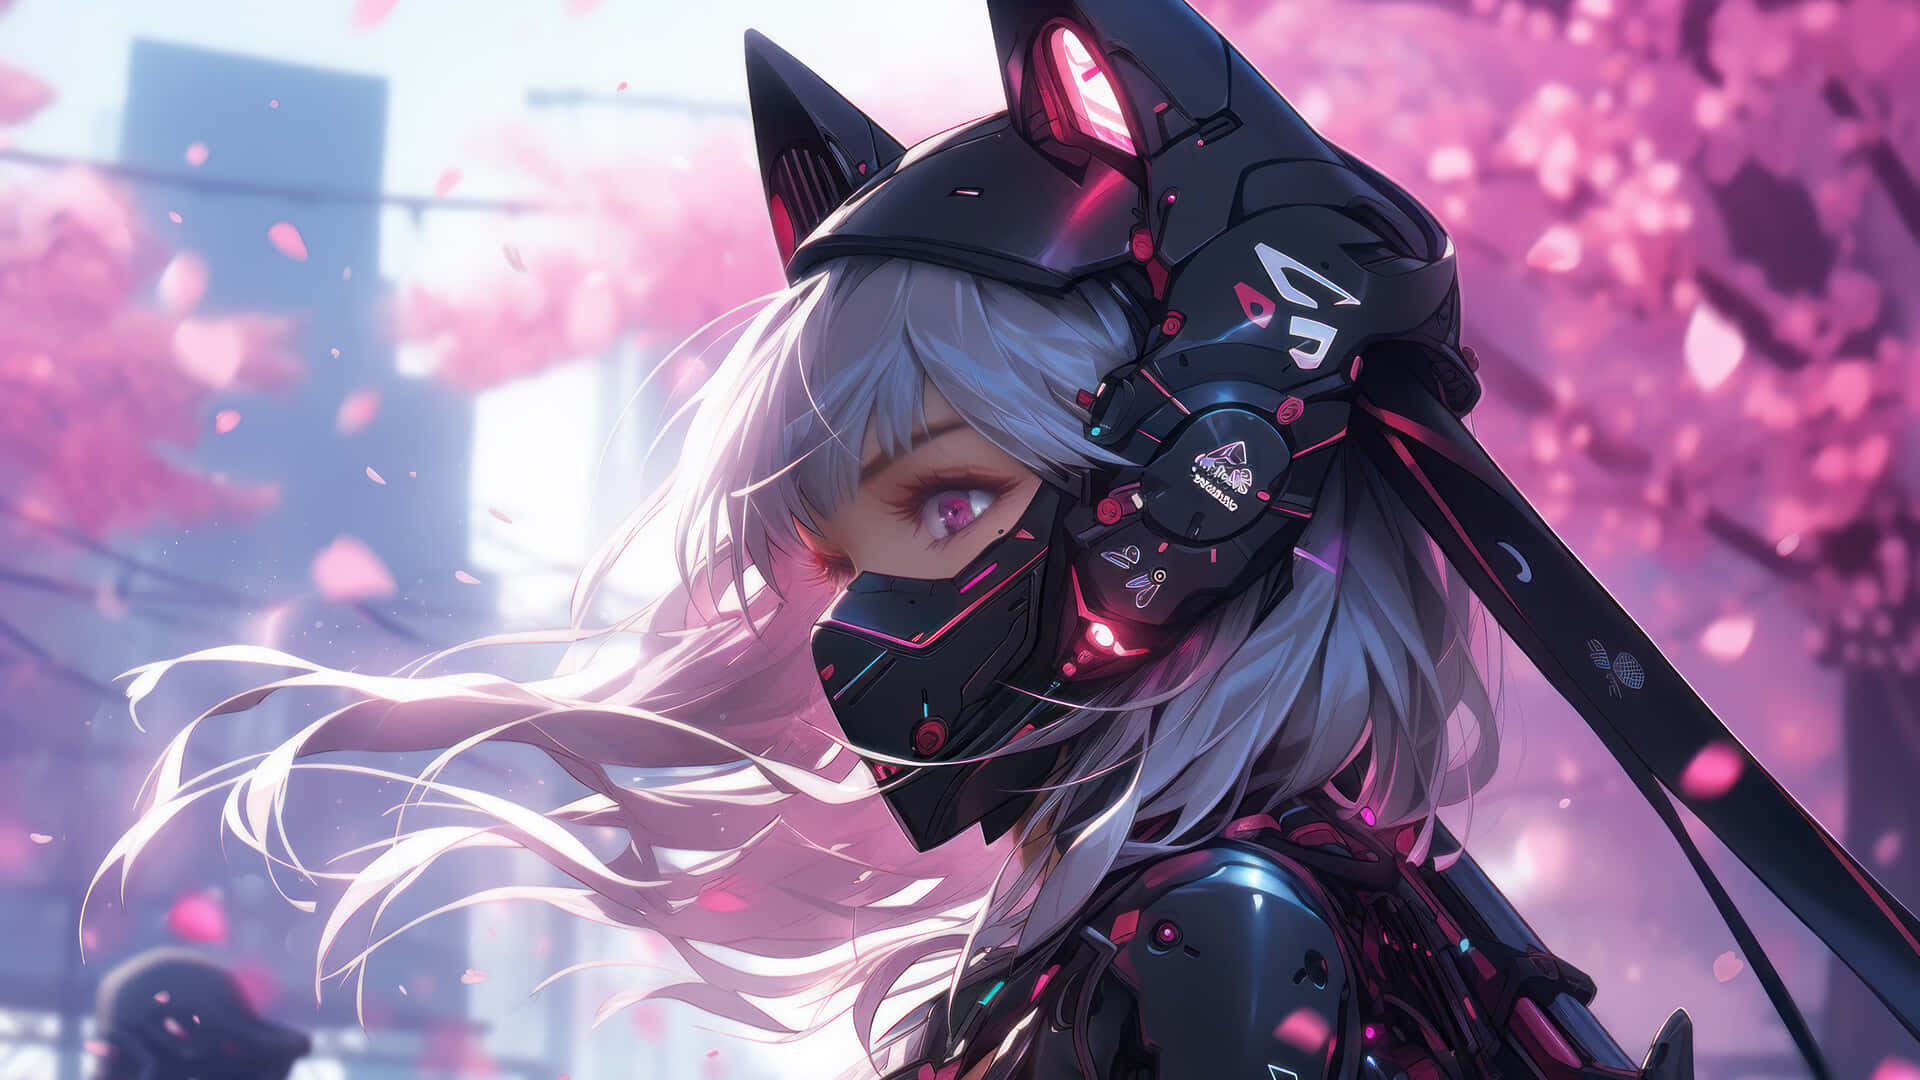 Cyberpunk Anime Girlwith Cat Ears Wallpaper